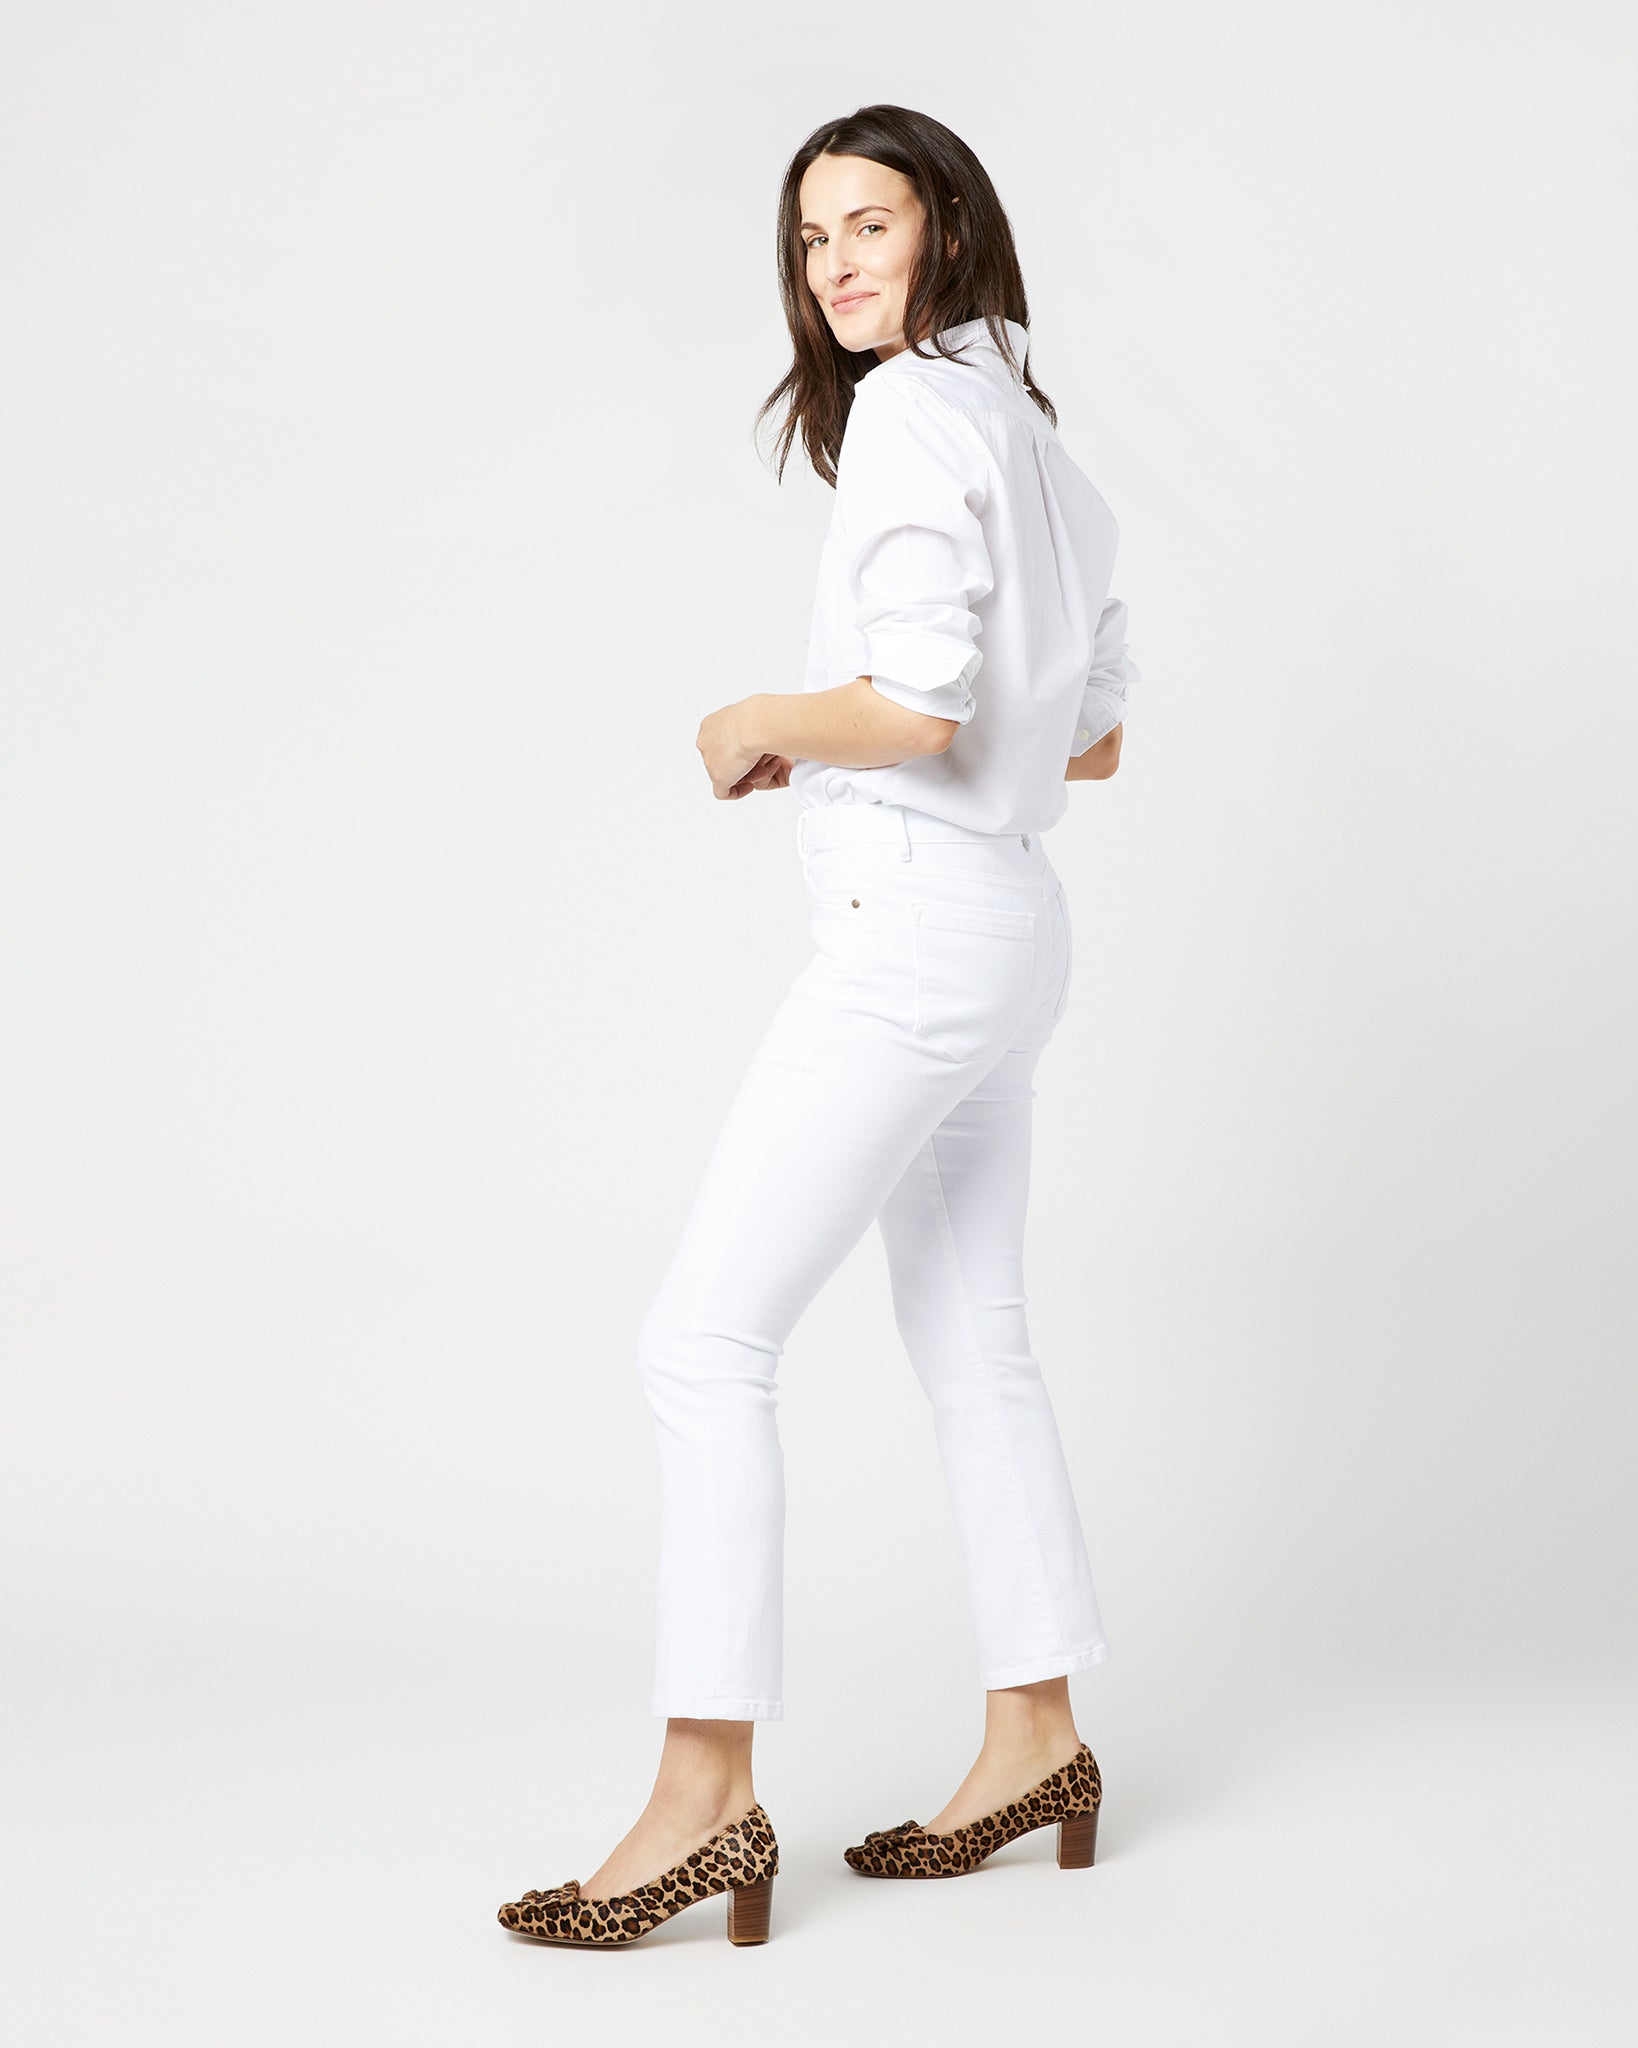 Flare Cropped 5-Pocket Jean in White Stretch Denim